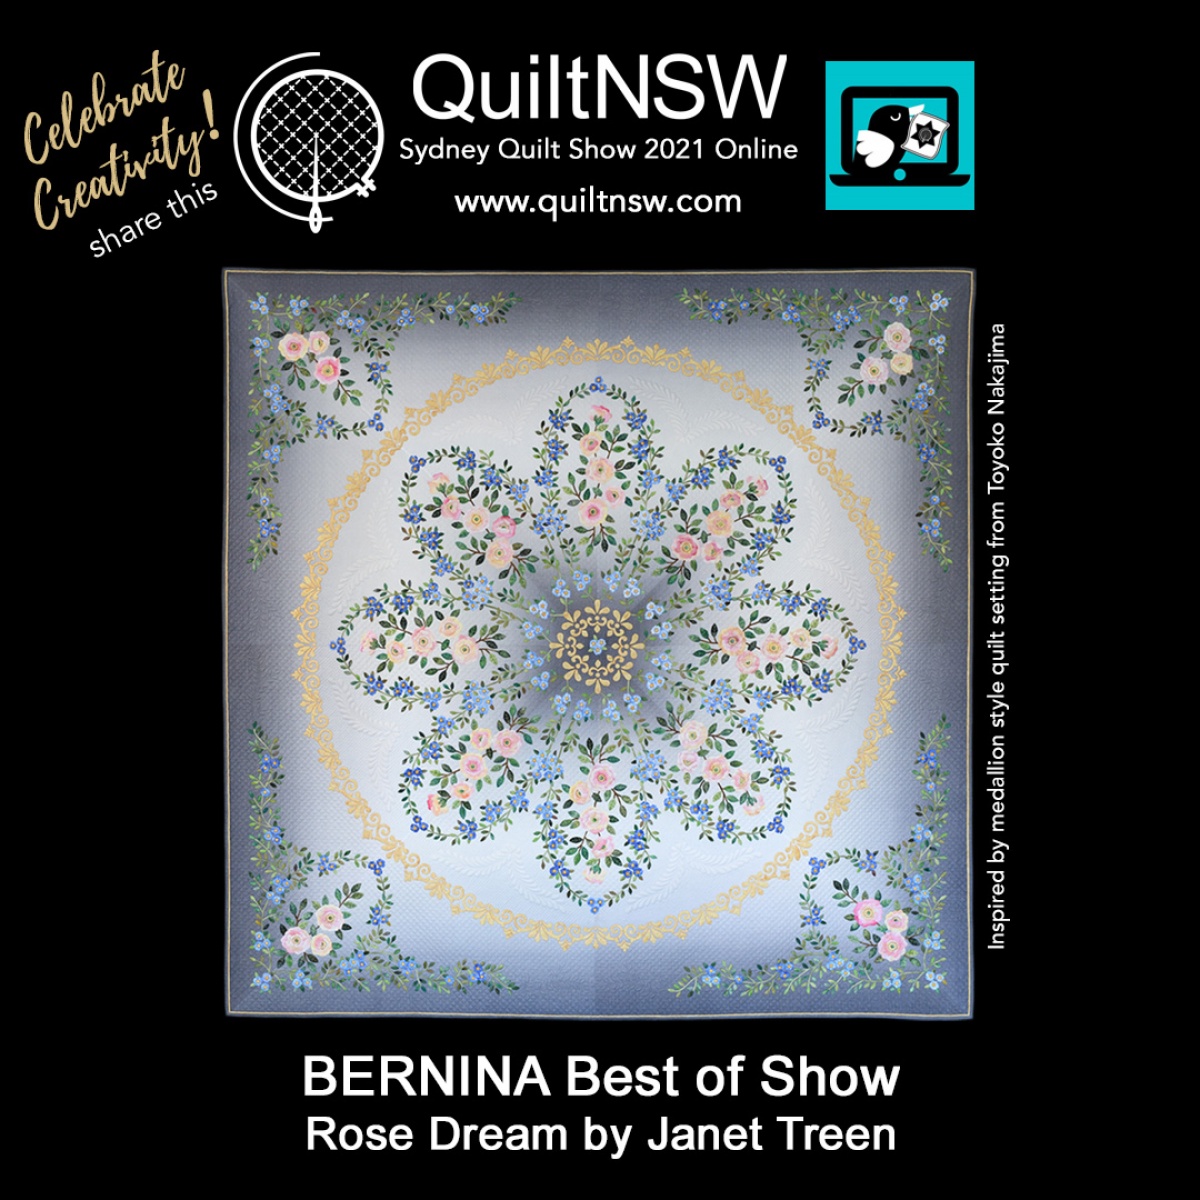 BERNINA Best of Show: Janet Treen